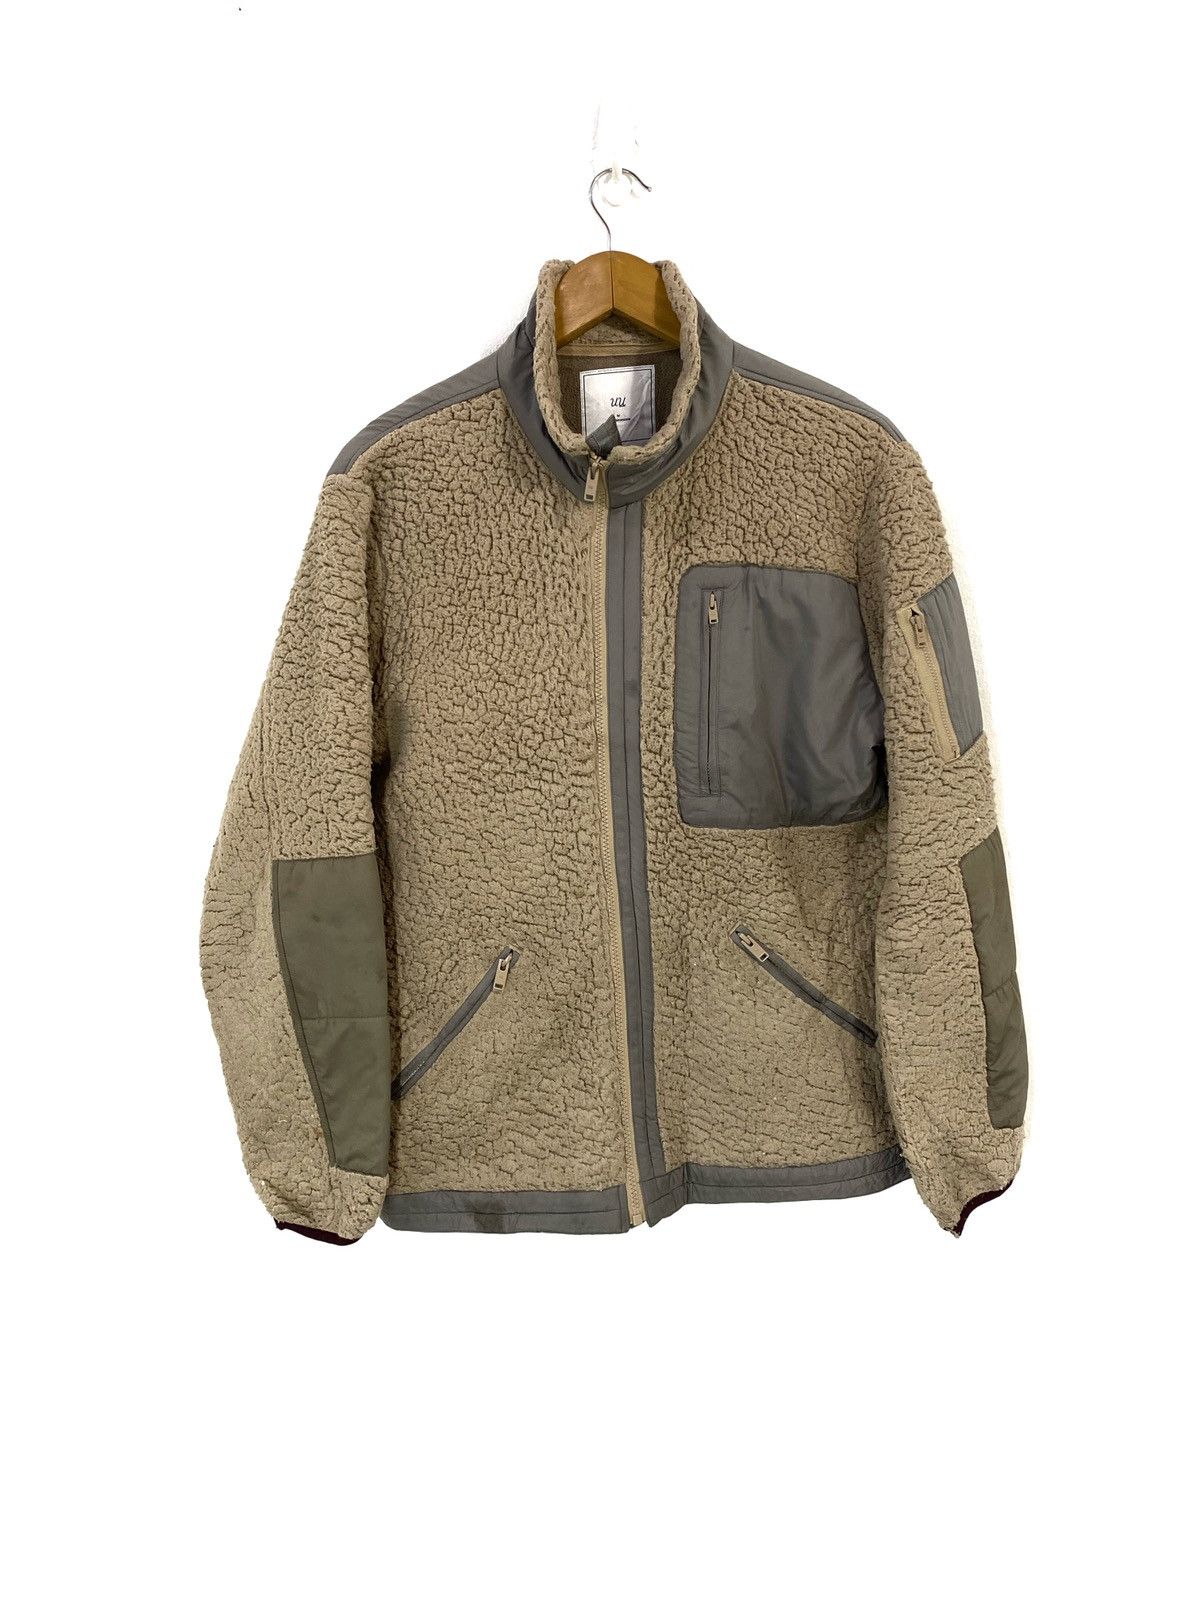 Fall/Winter 2012 Undercover X Uniqlo Fleece Jacket Design - 1